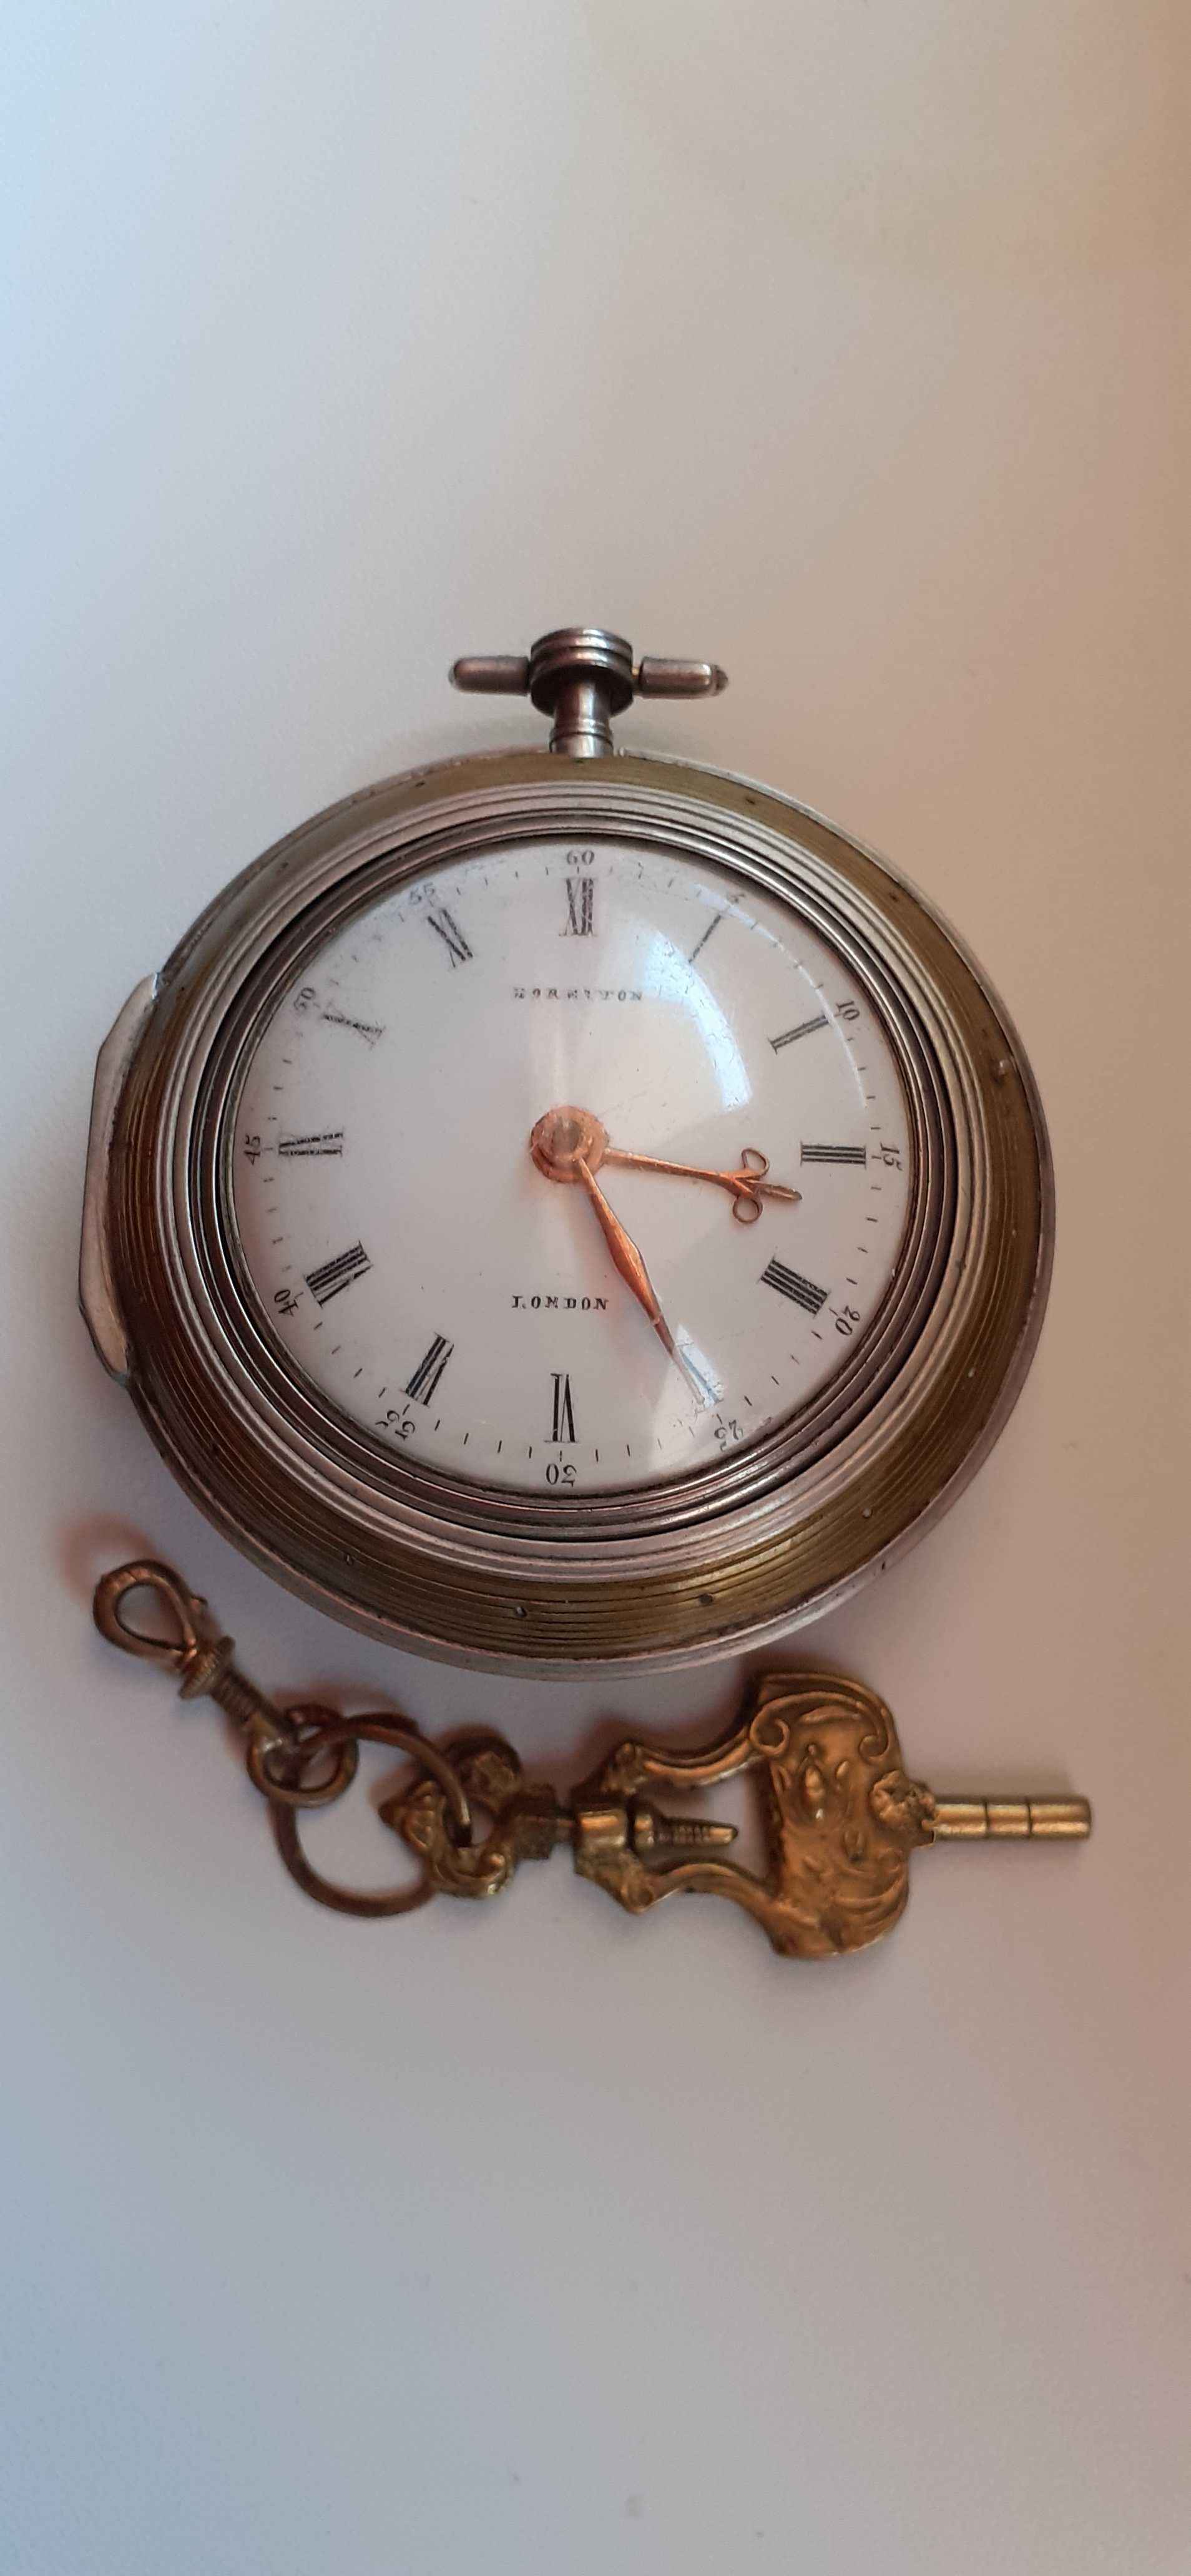 Zegarek kieszonkowy-dewizka srebro MORETTON LONDON ok. 1700 r.